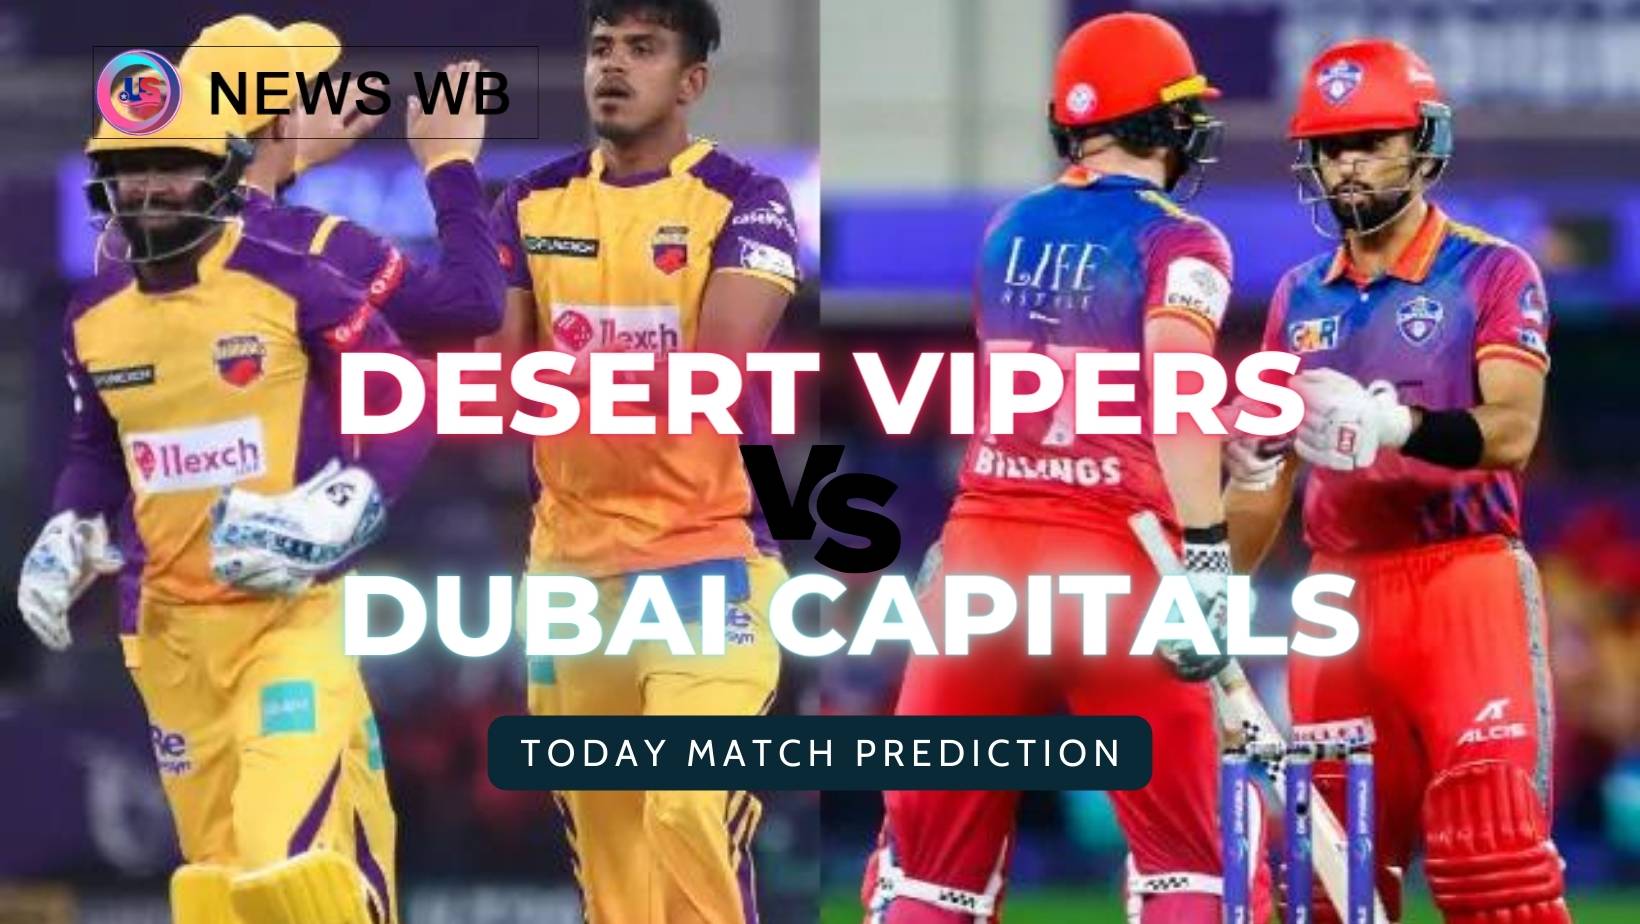 Today Match Prediction: SW vs DCP Dream11 Team, Sharjah Warriors vs Dubai Capitals 14th Match, Who Will Win?